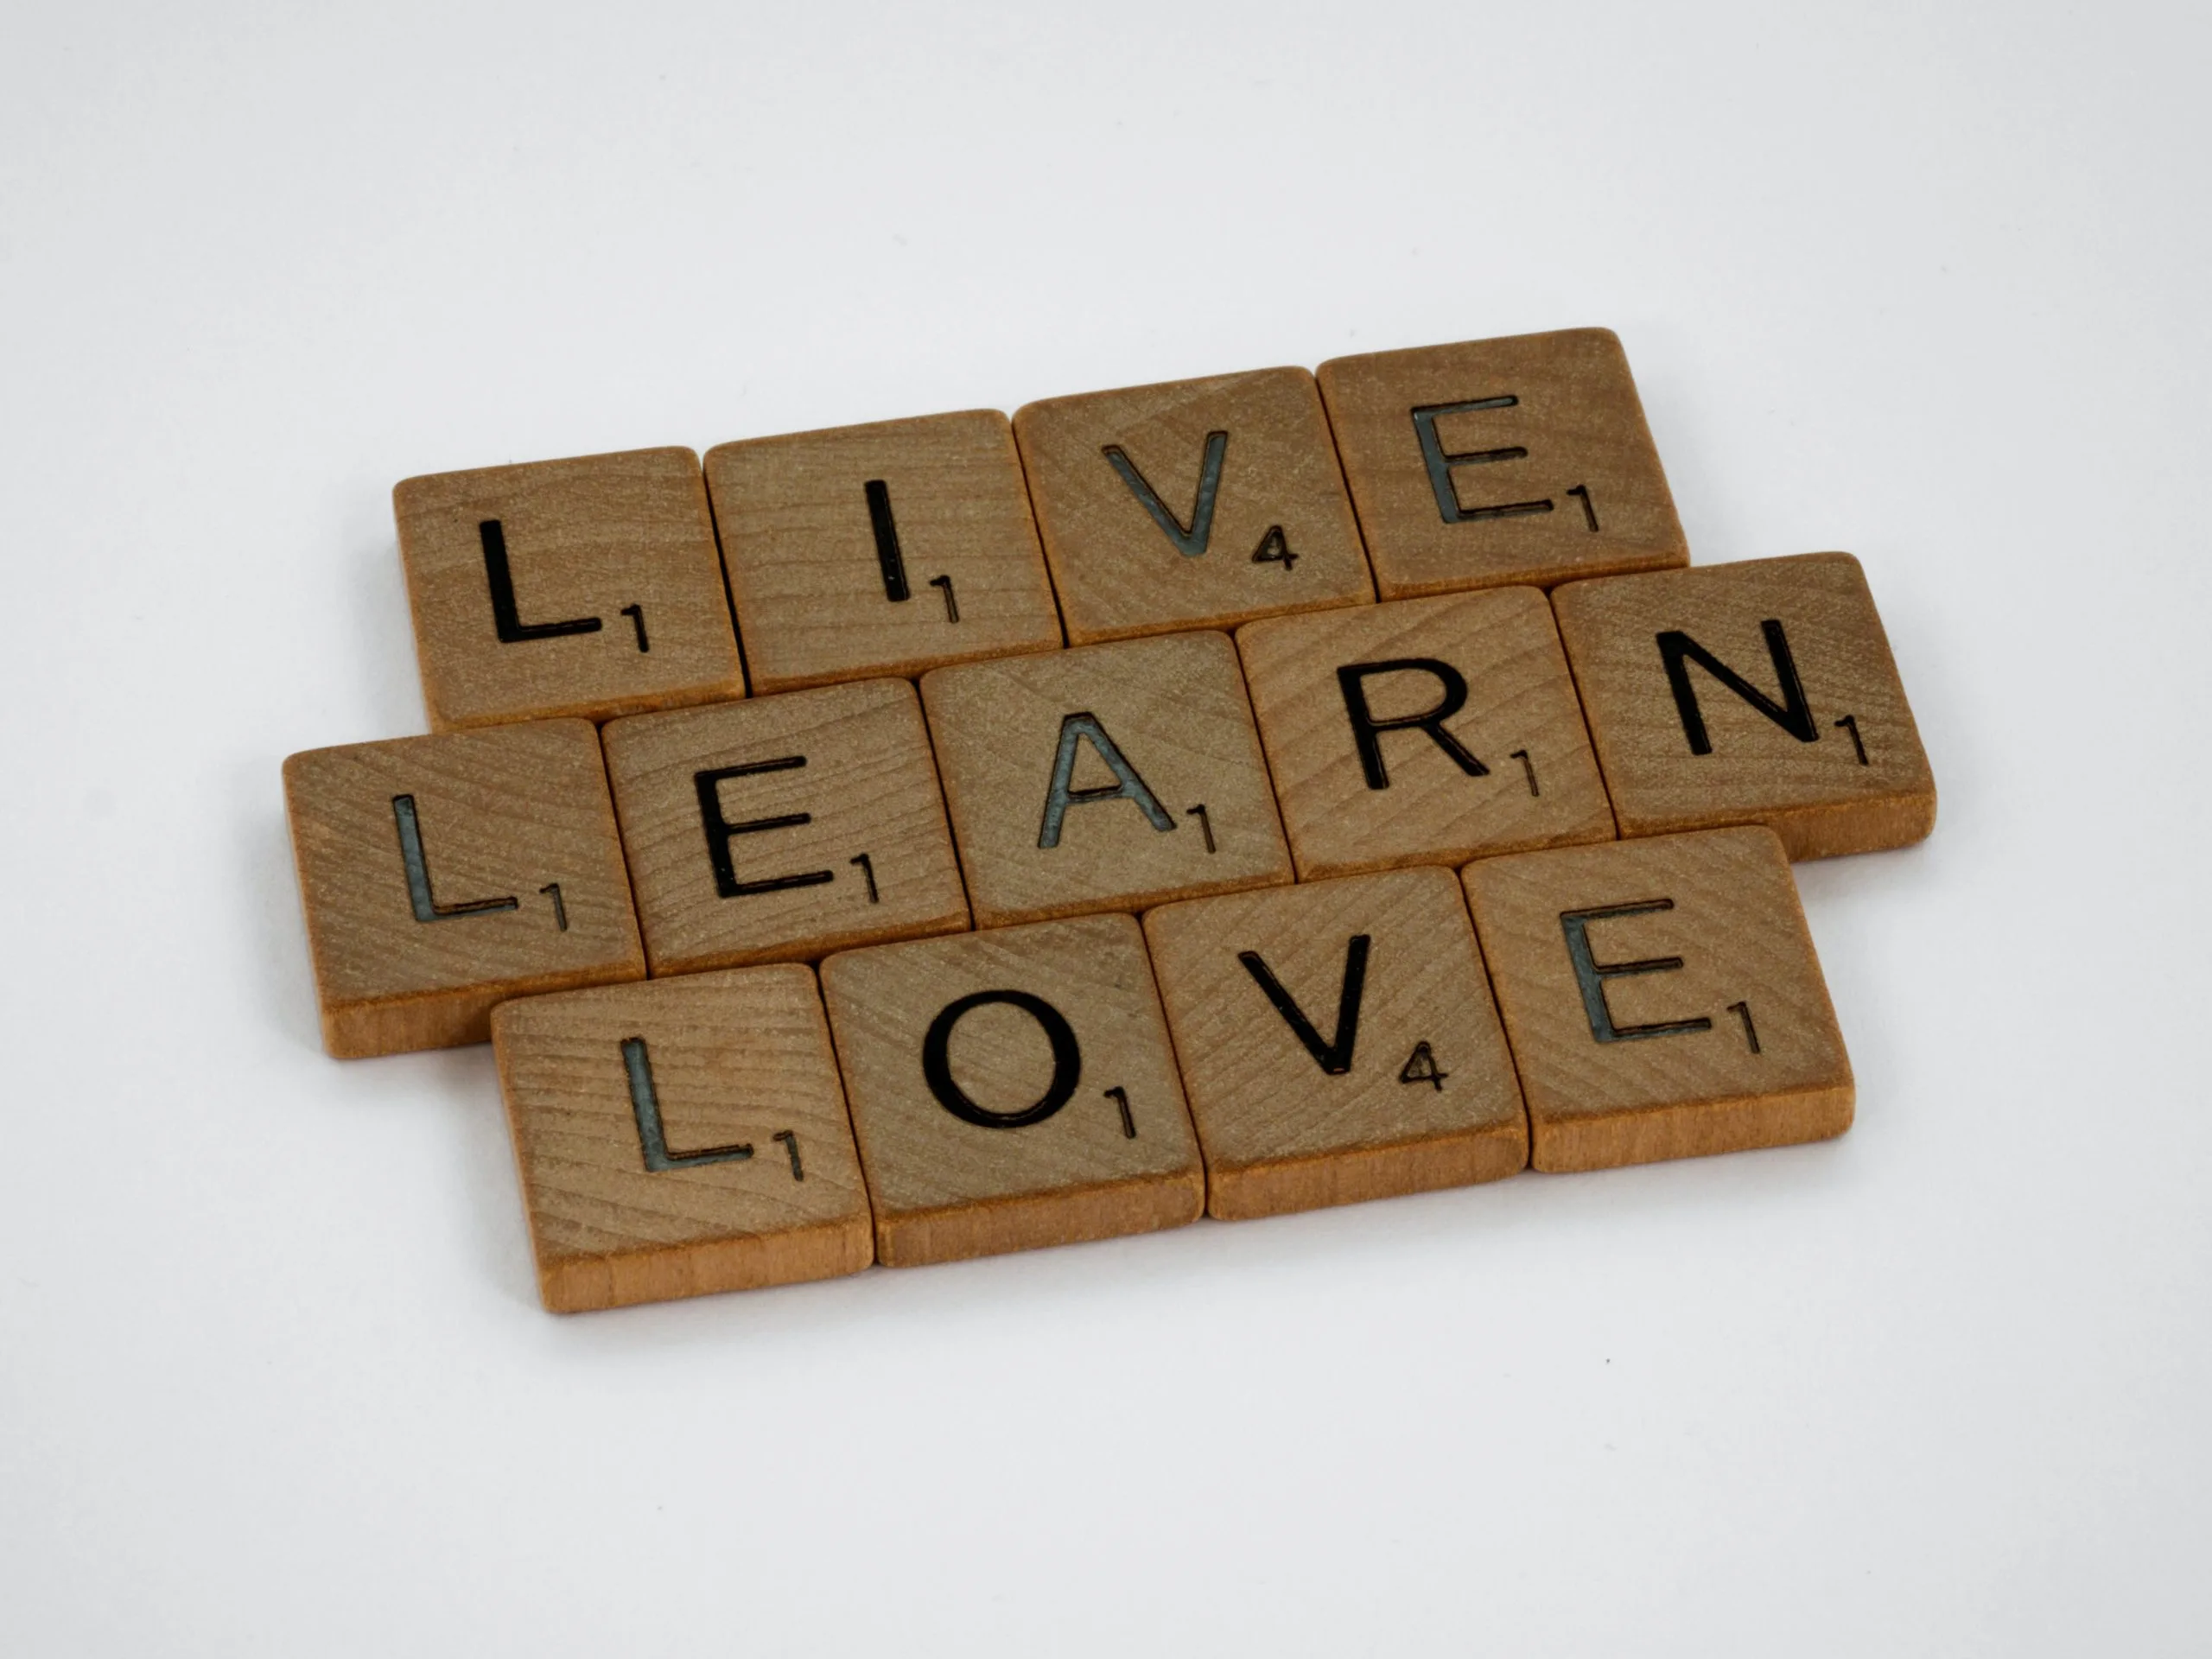 Lifelong Learning!